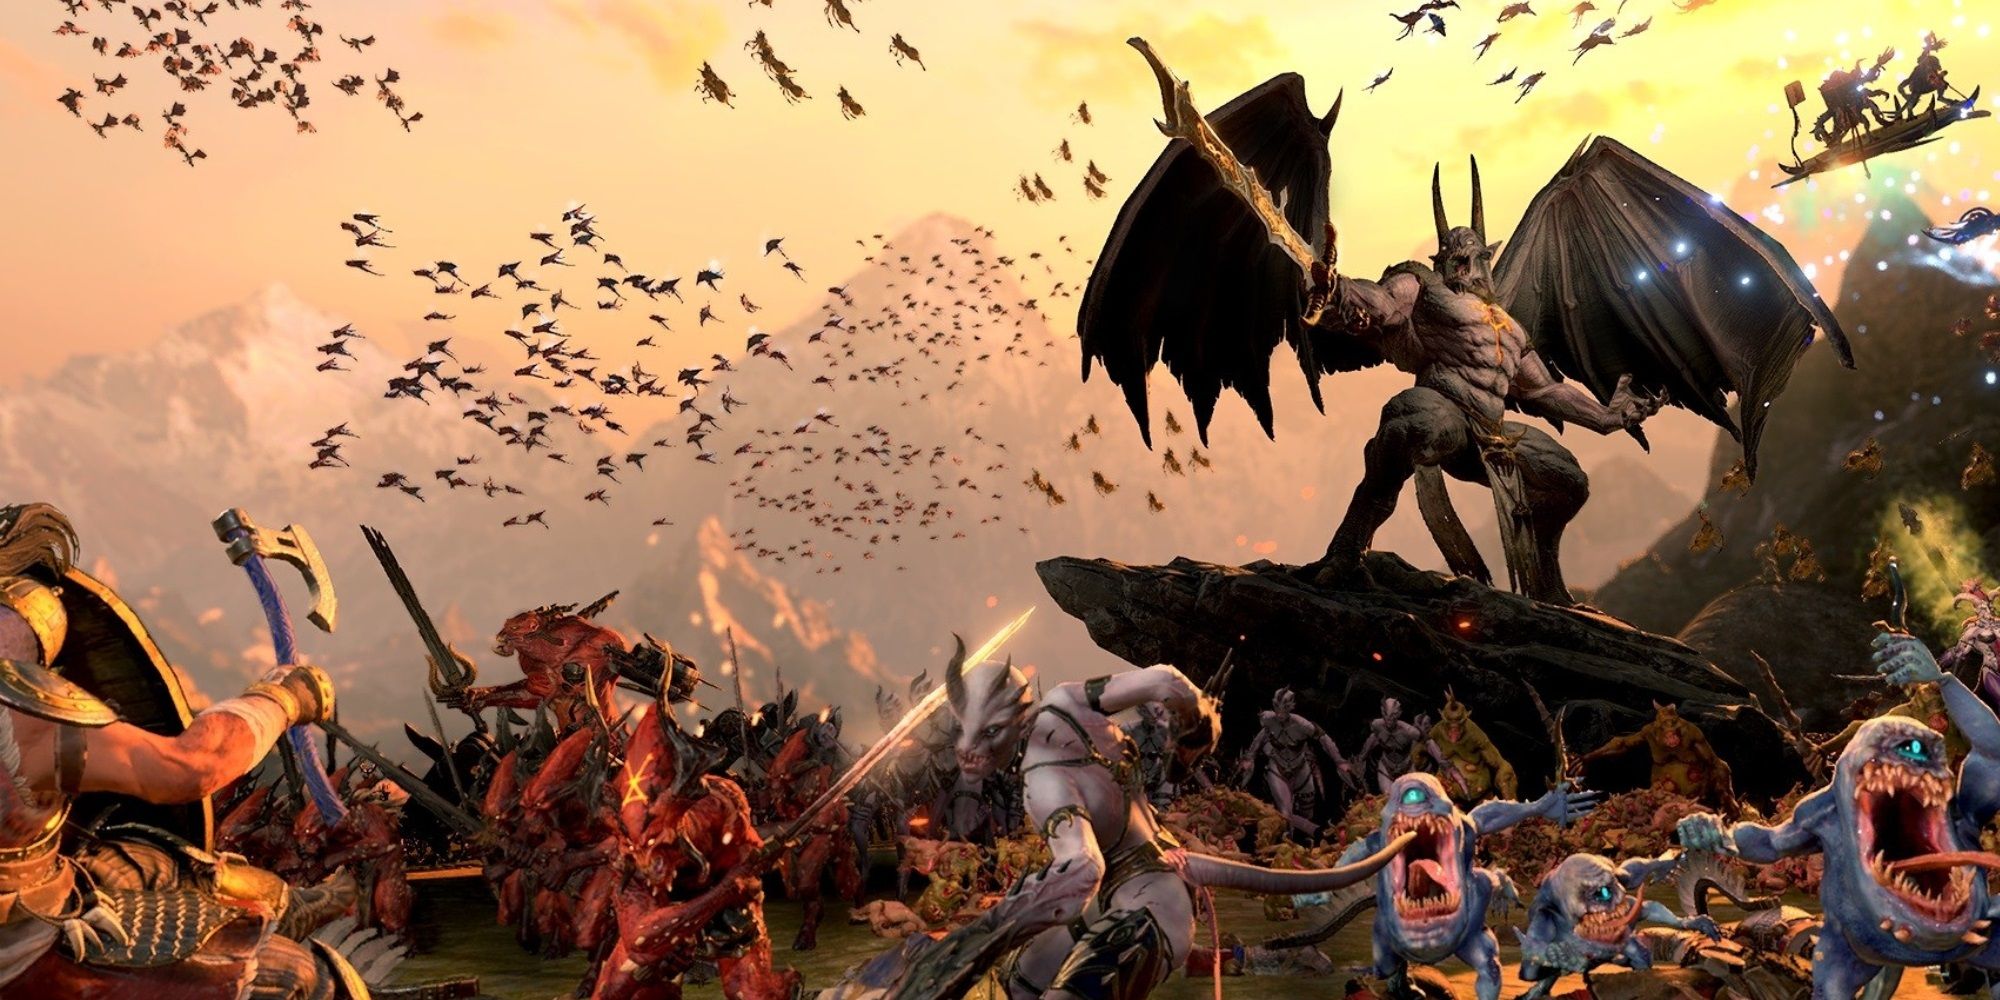 Total War Warhammer - Many species charging together.